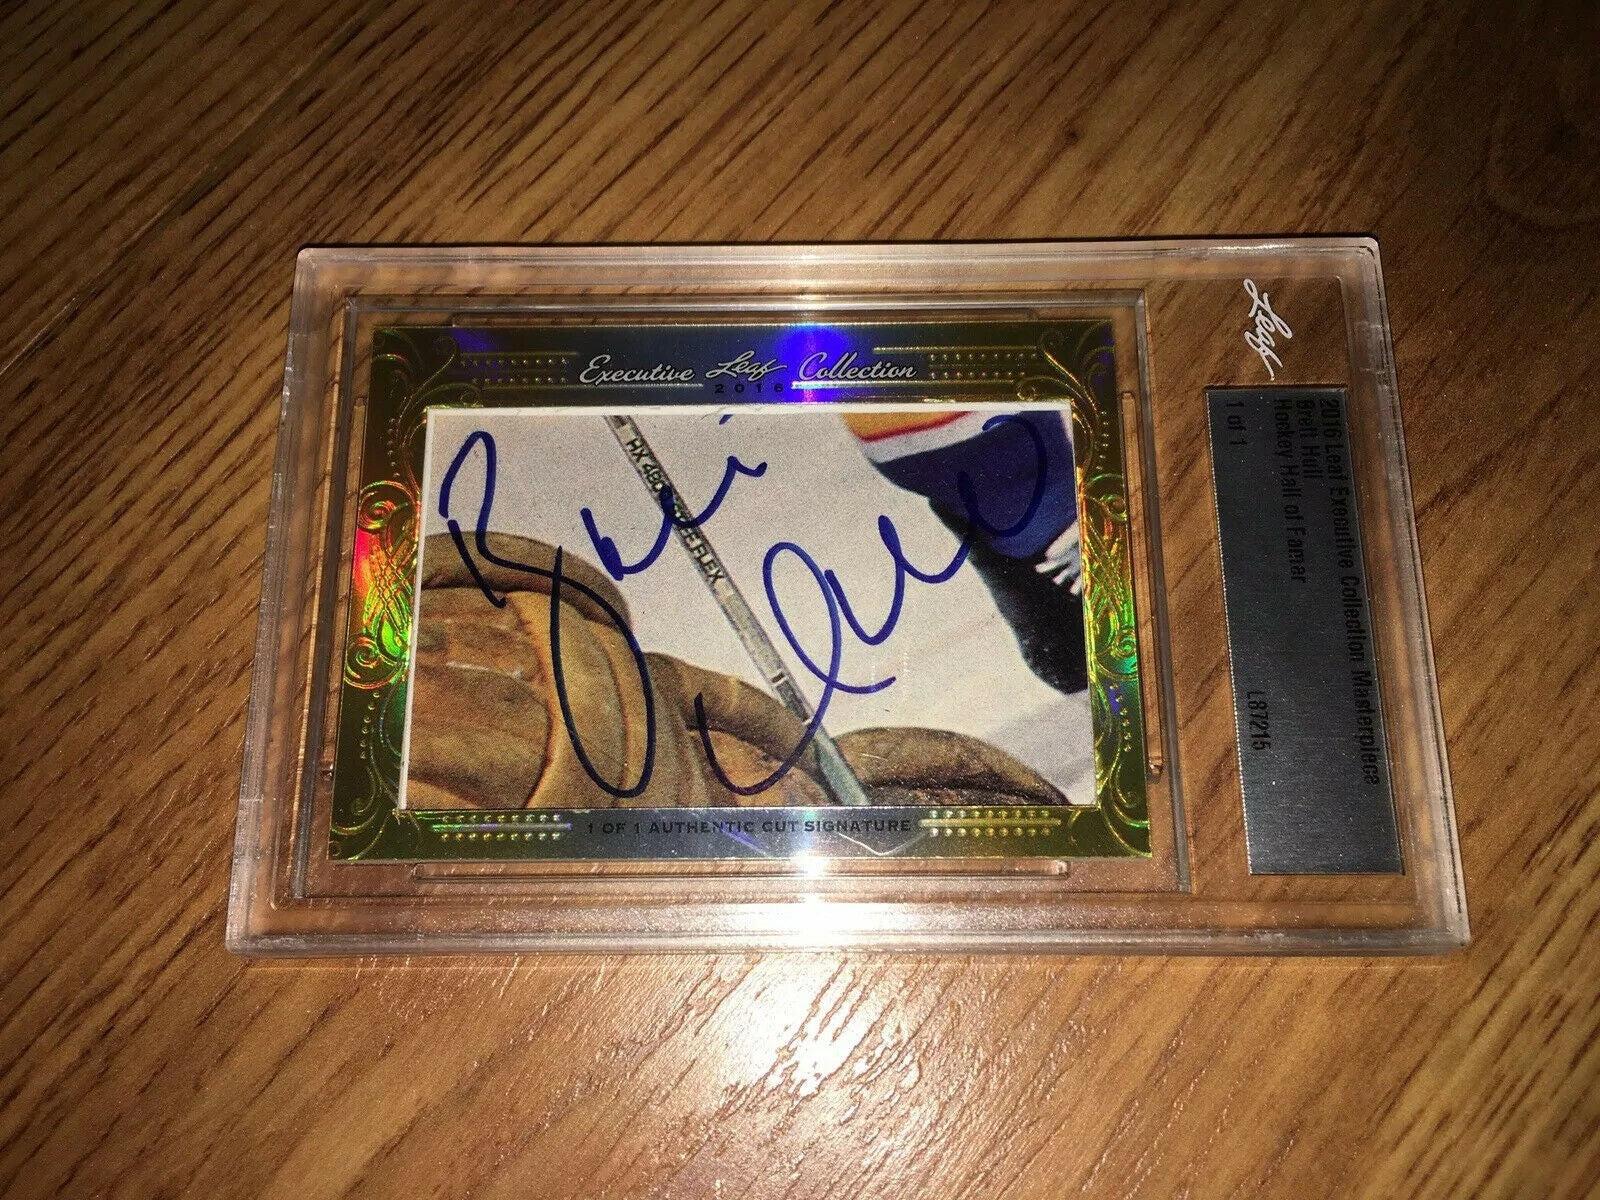 Brett Hull 2016 Leaf Masterpiece Cut Signature certified autograph card 1/1 JSA